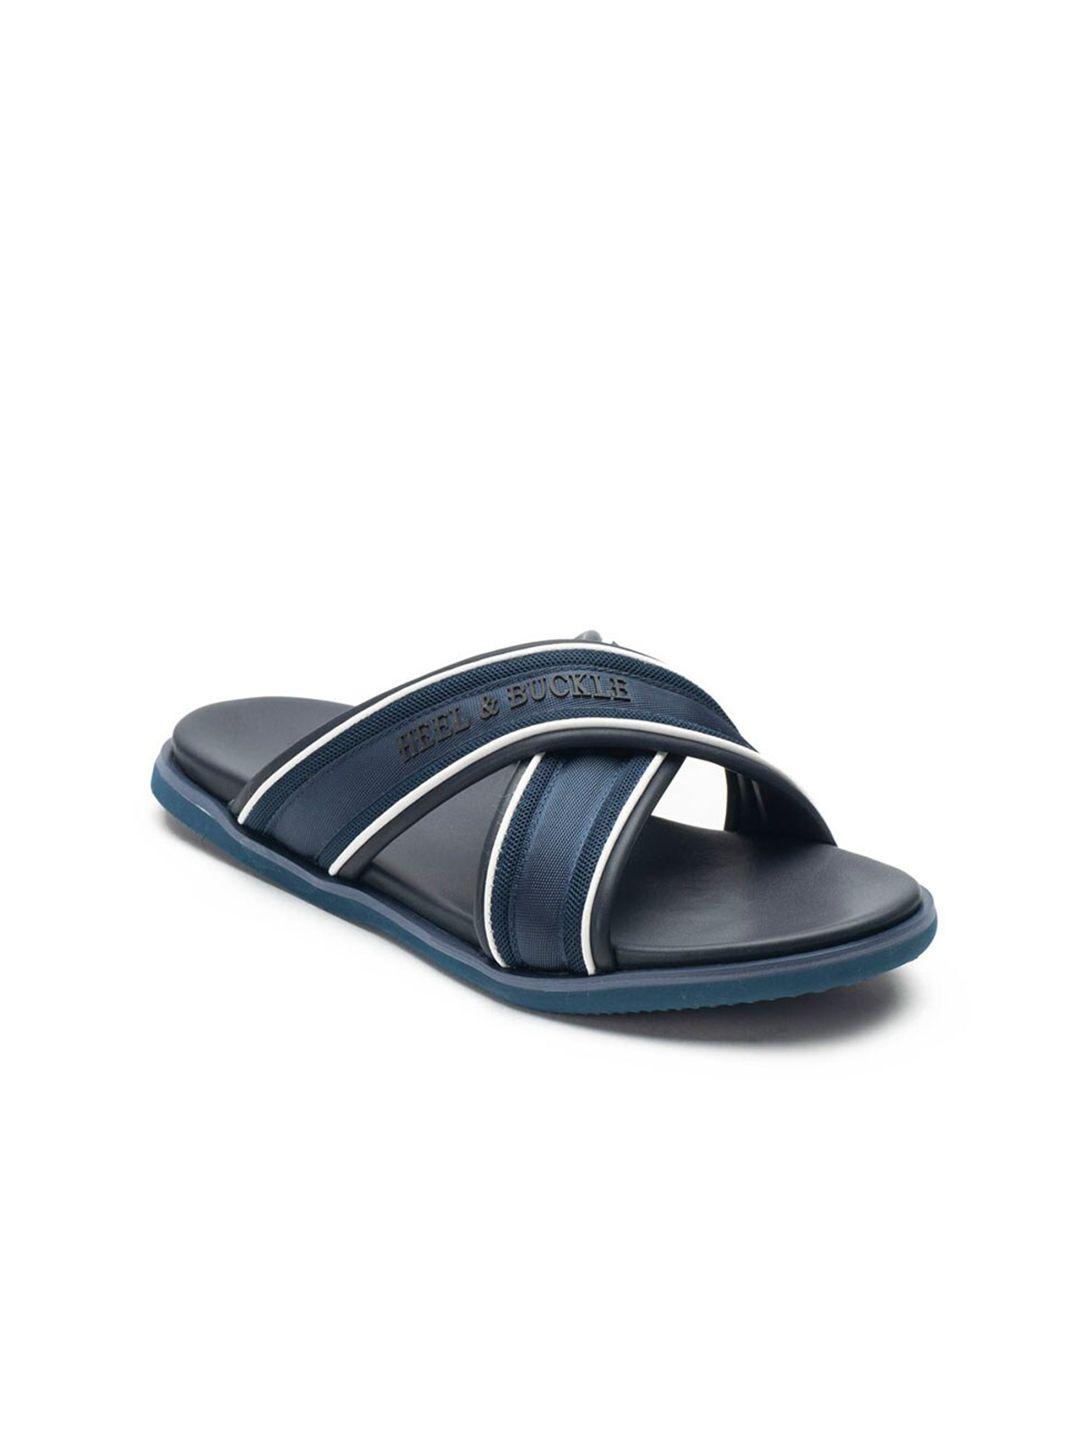 heel-&-buckle-london-men-navy-blue-&-white-leather-comfort-sandals